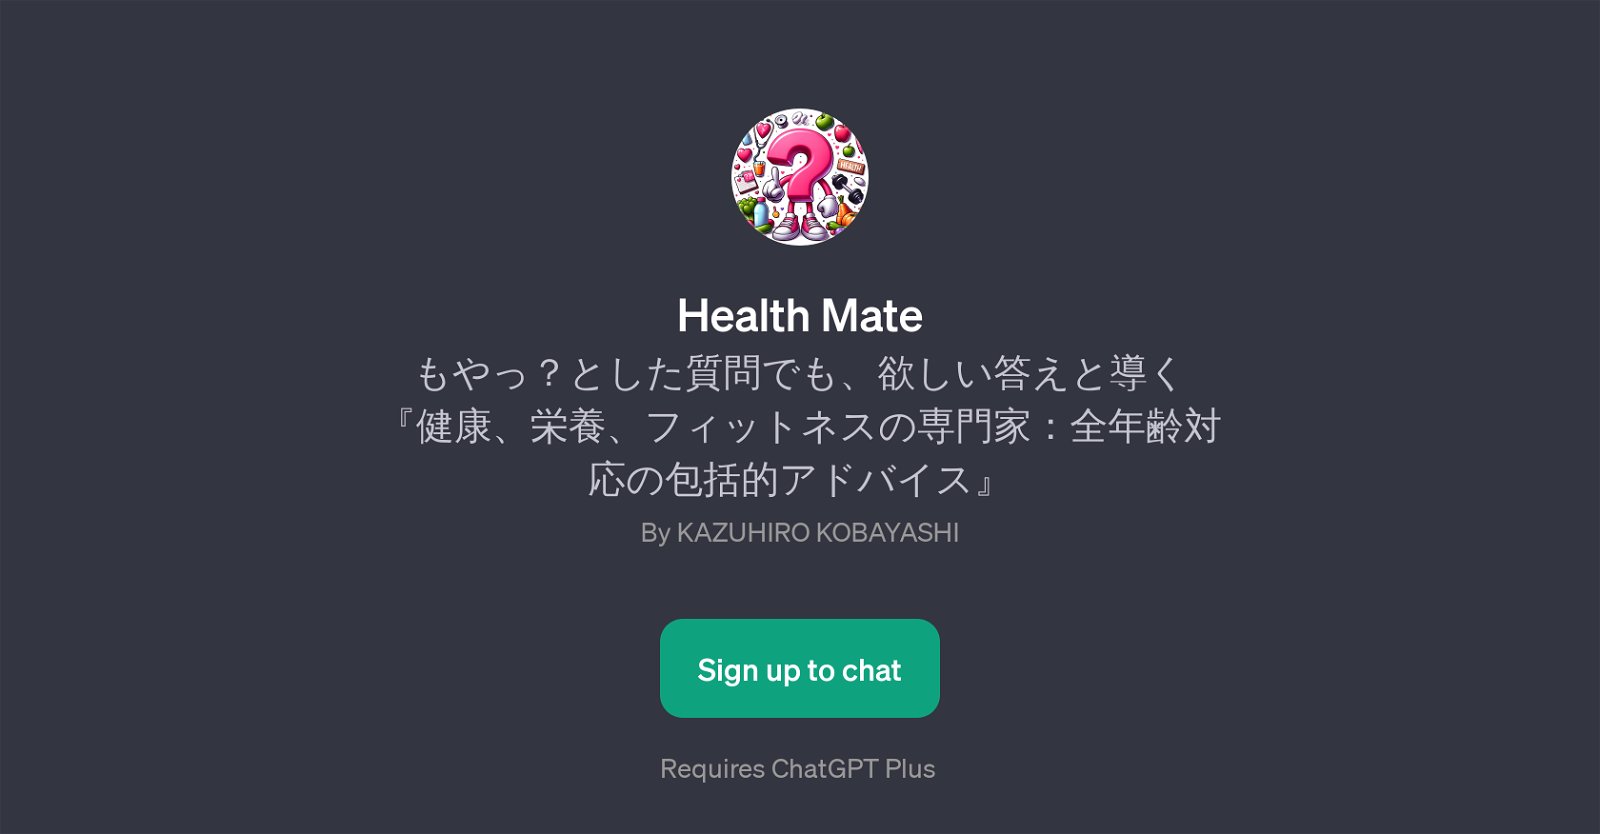 Health Mate website